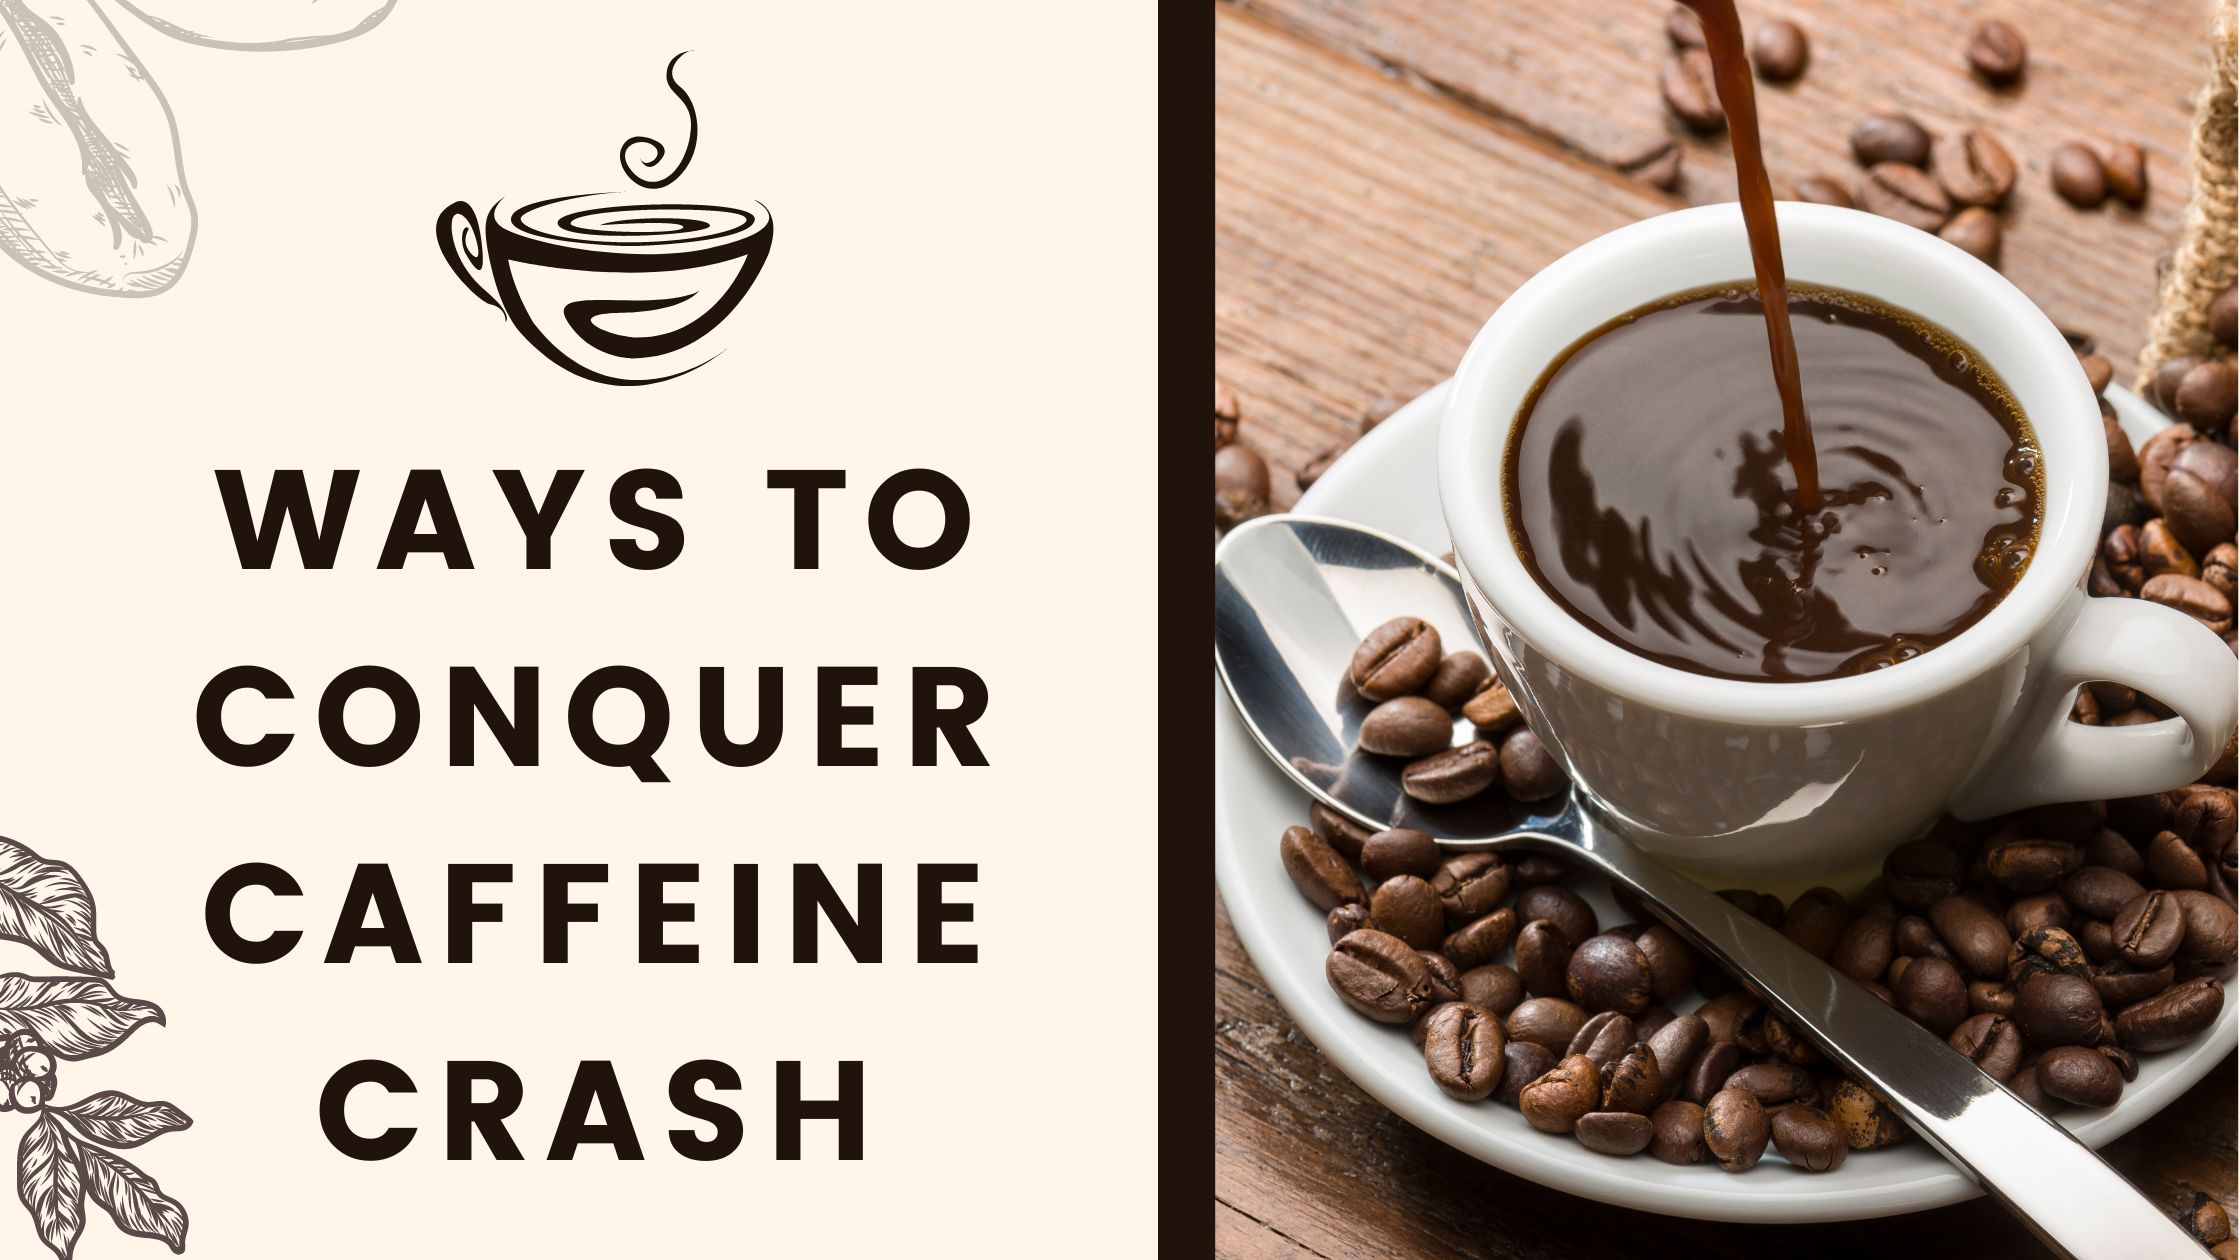 Ways to conquer caffeine crash